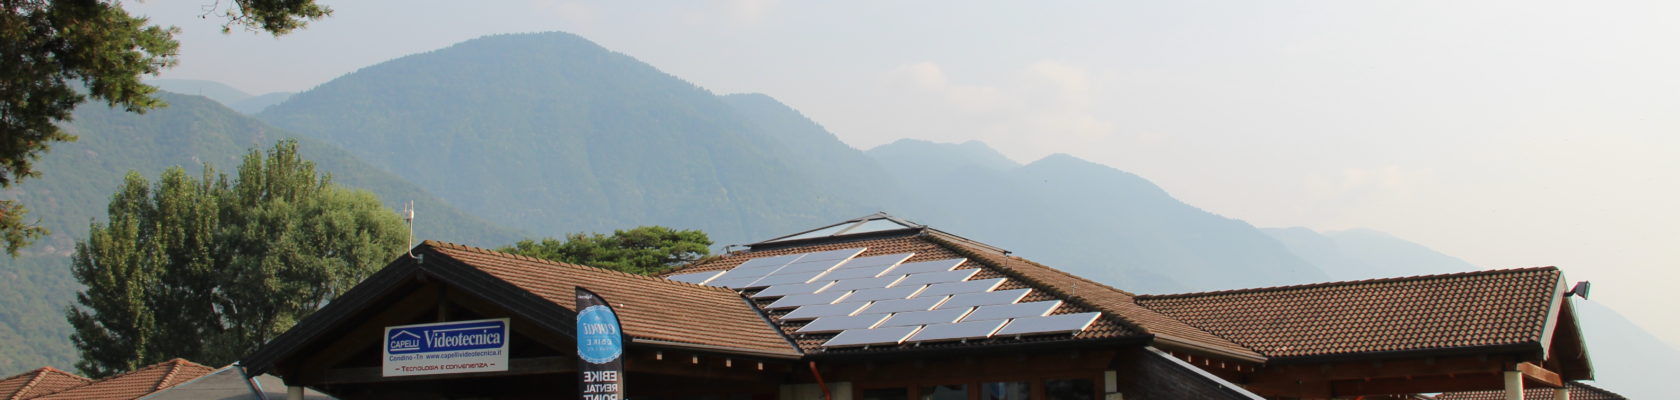 Impianto fotovoltaico Struttura Idroland Baitoni